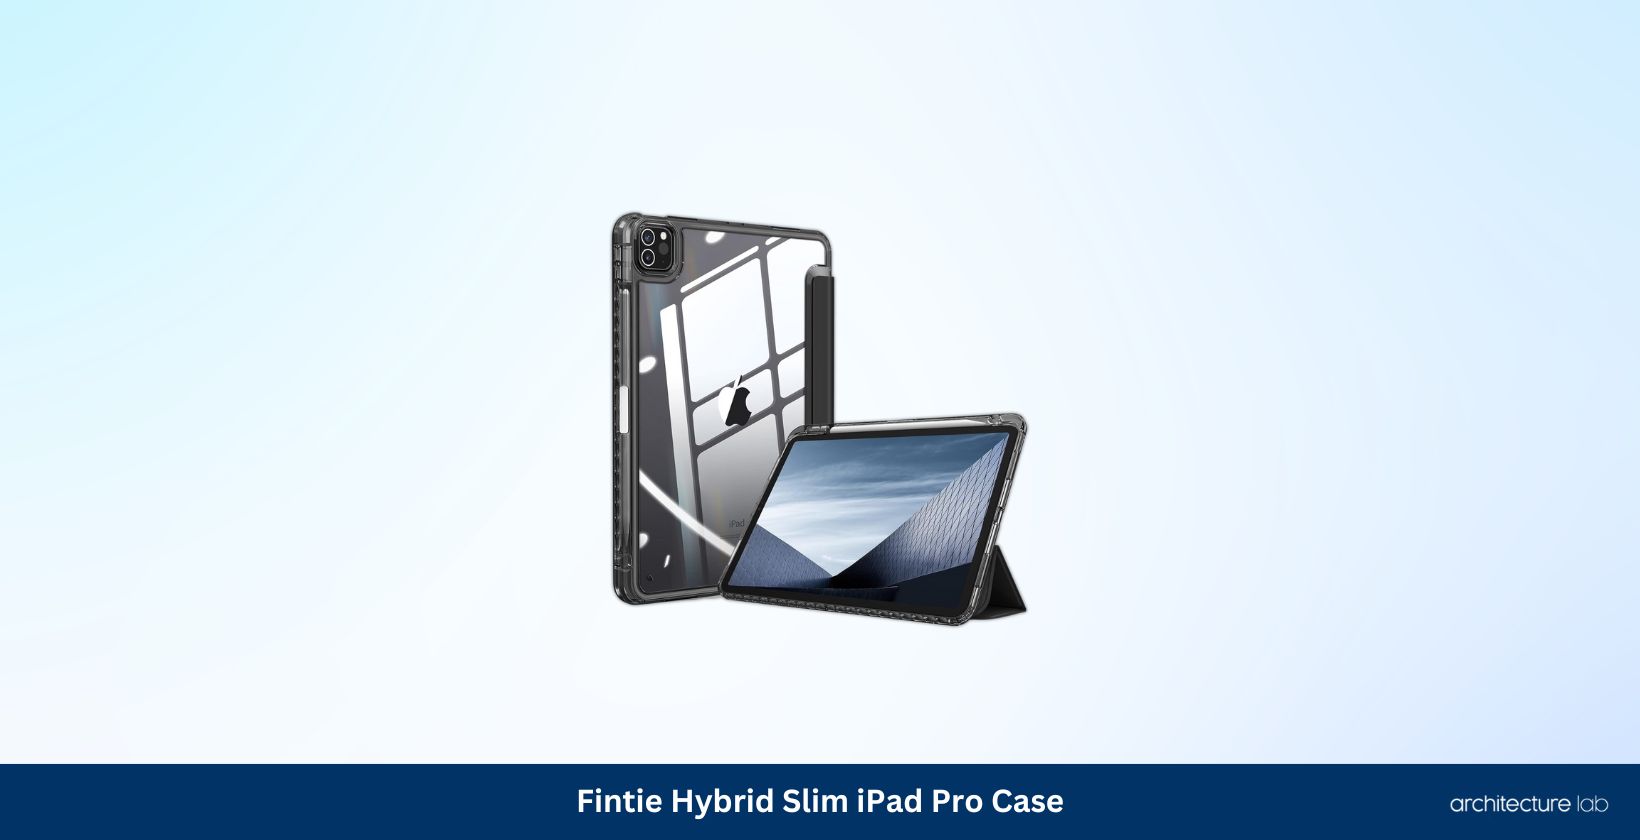 Fintie hybrid slim ipad pro case